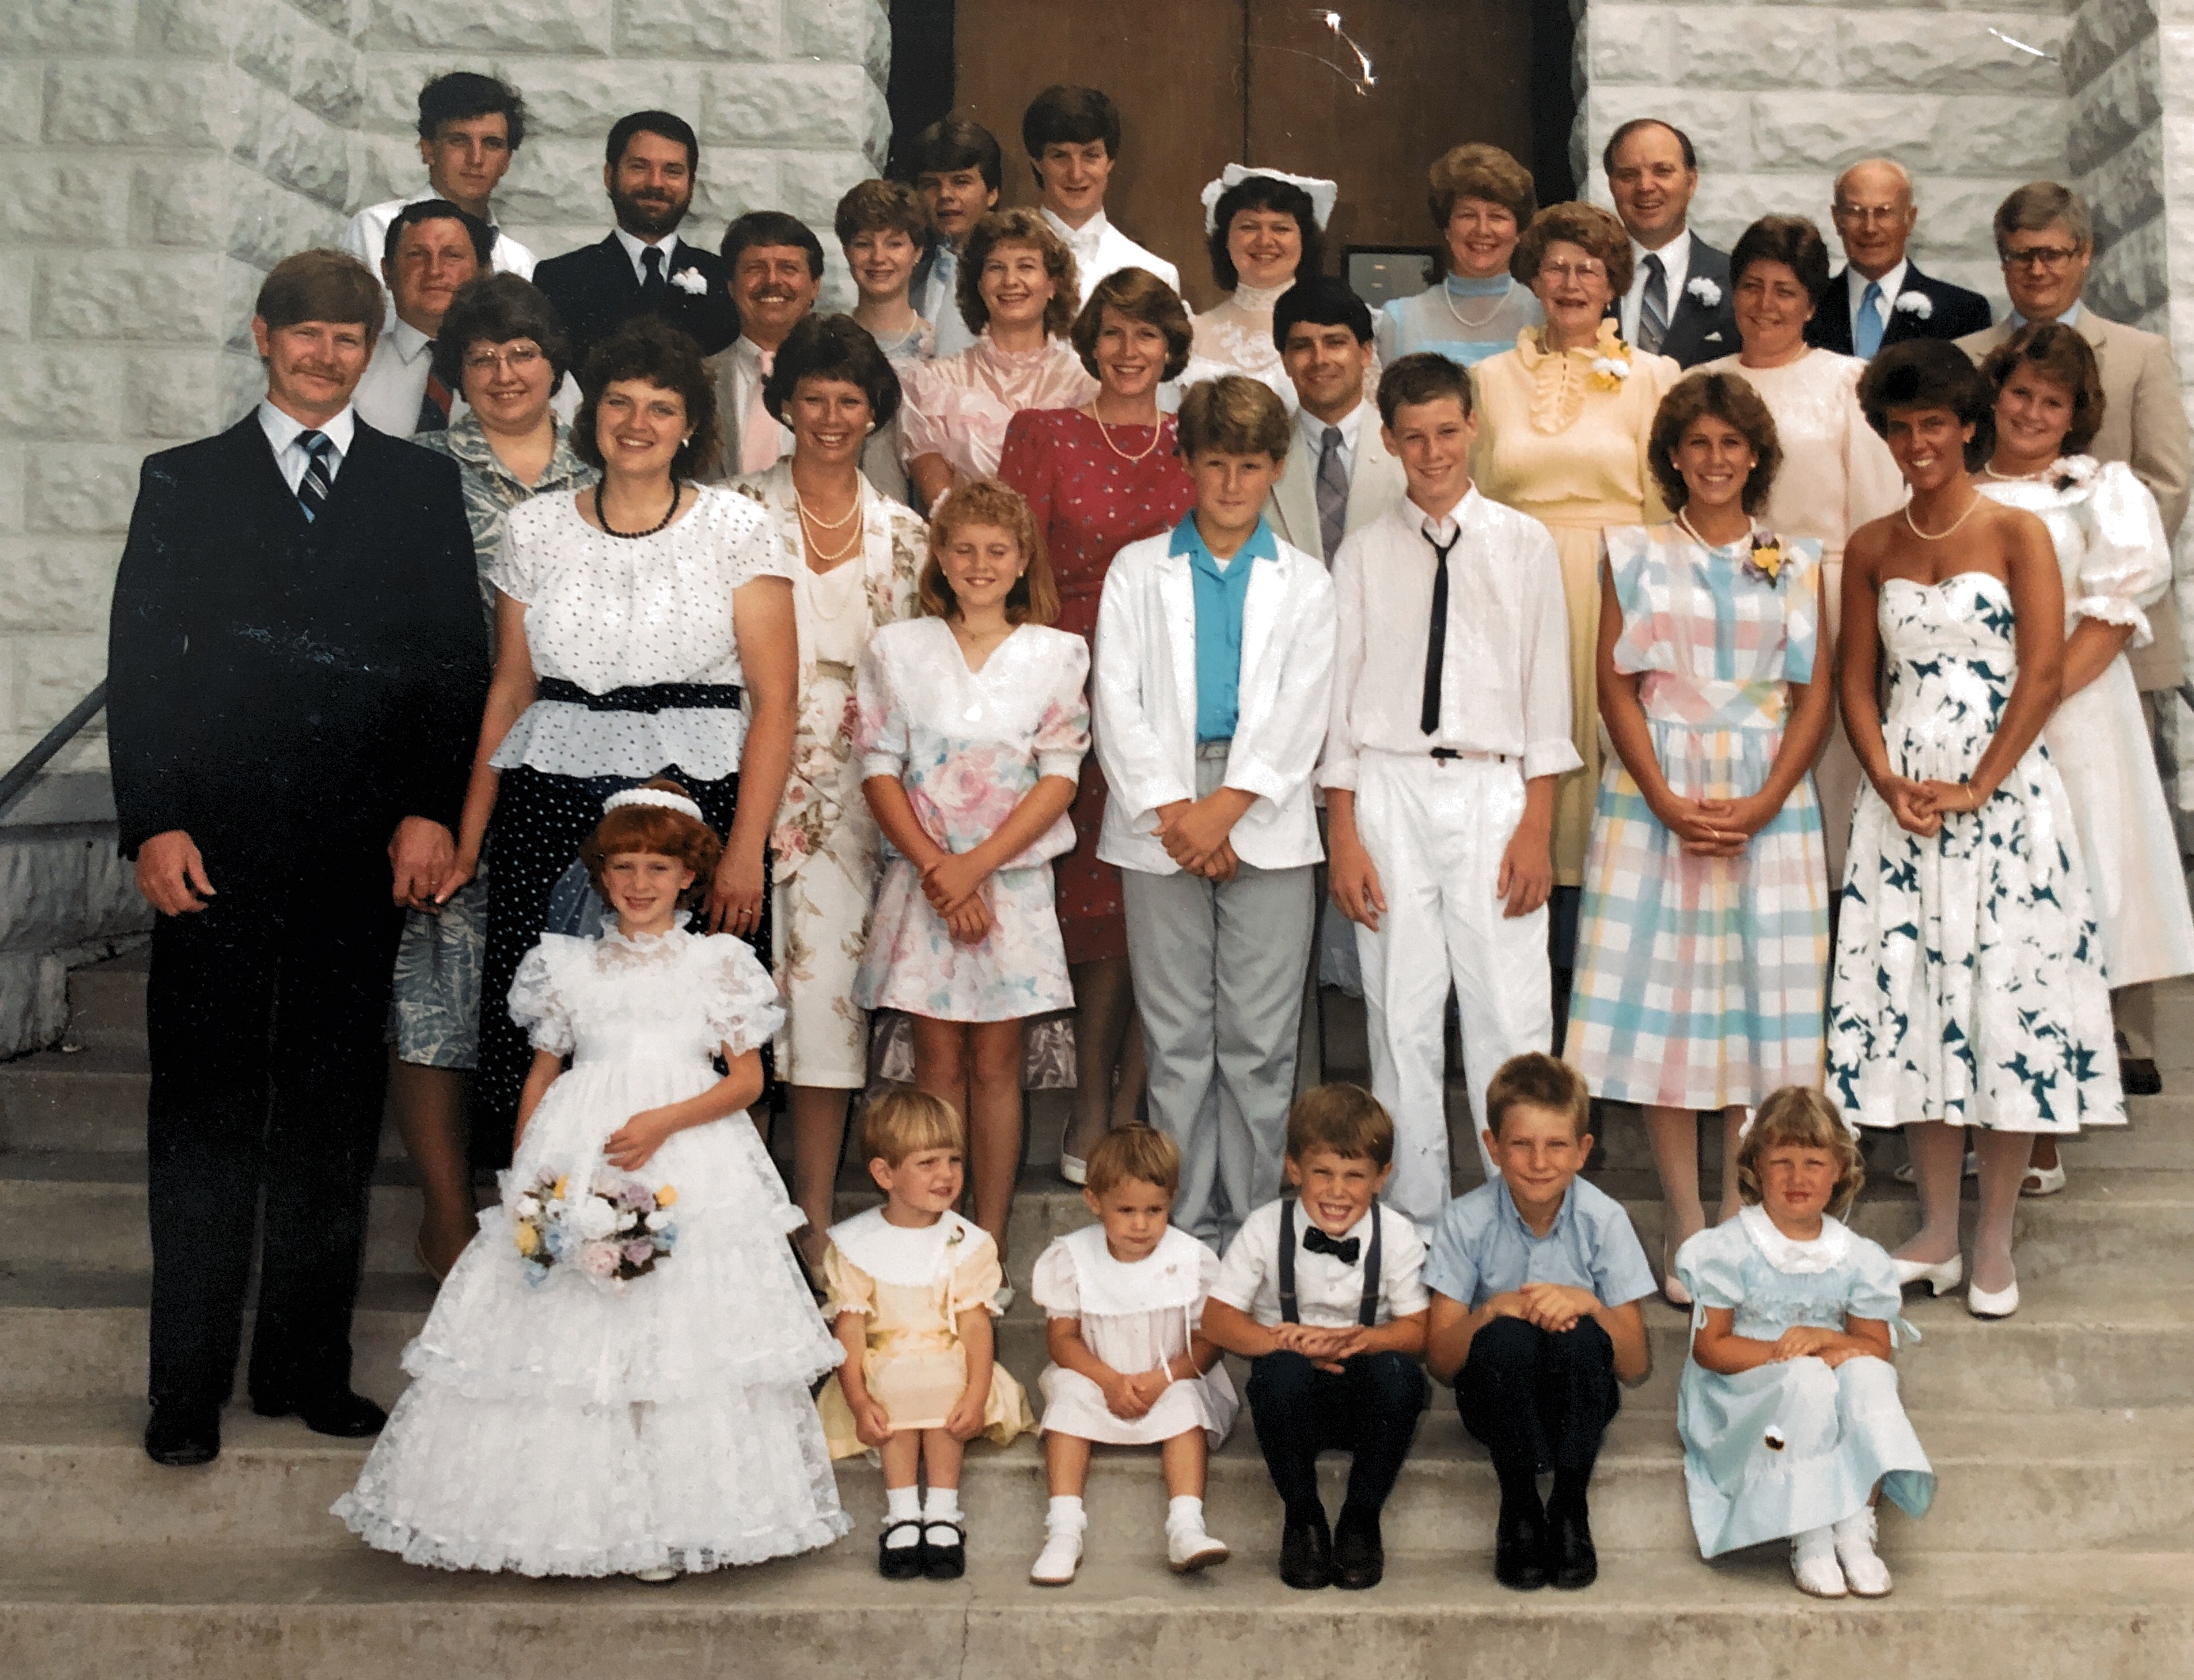 1986 Mike and Cindy Kloska’s wedding